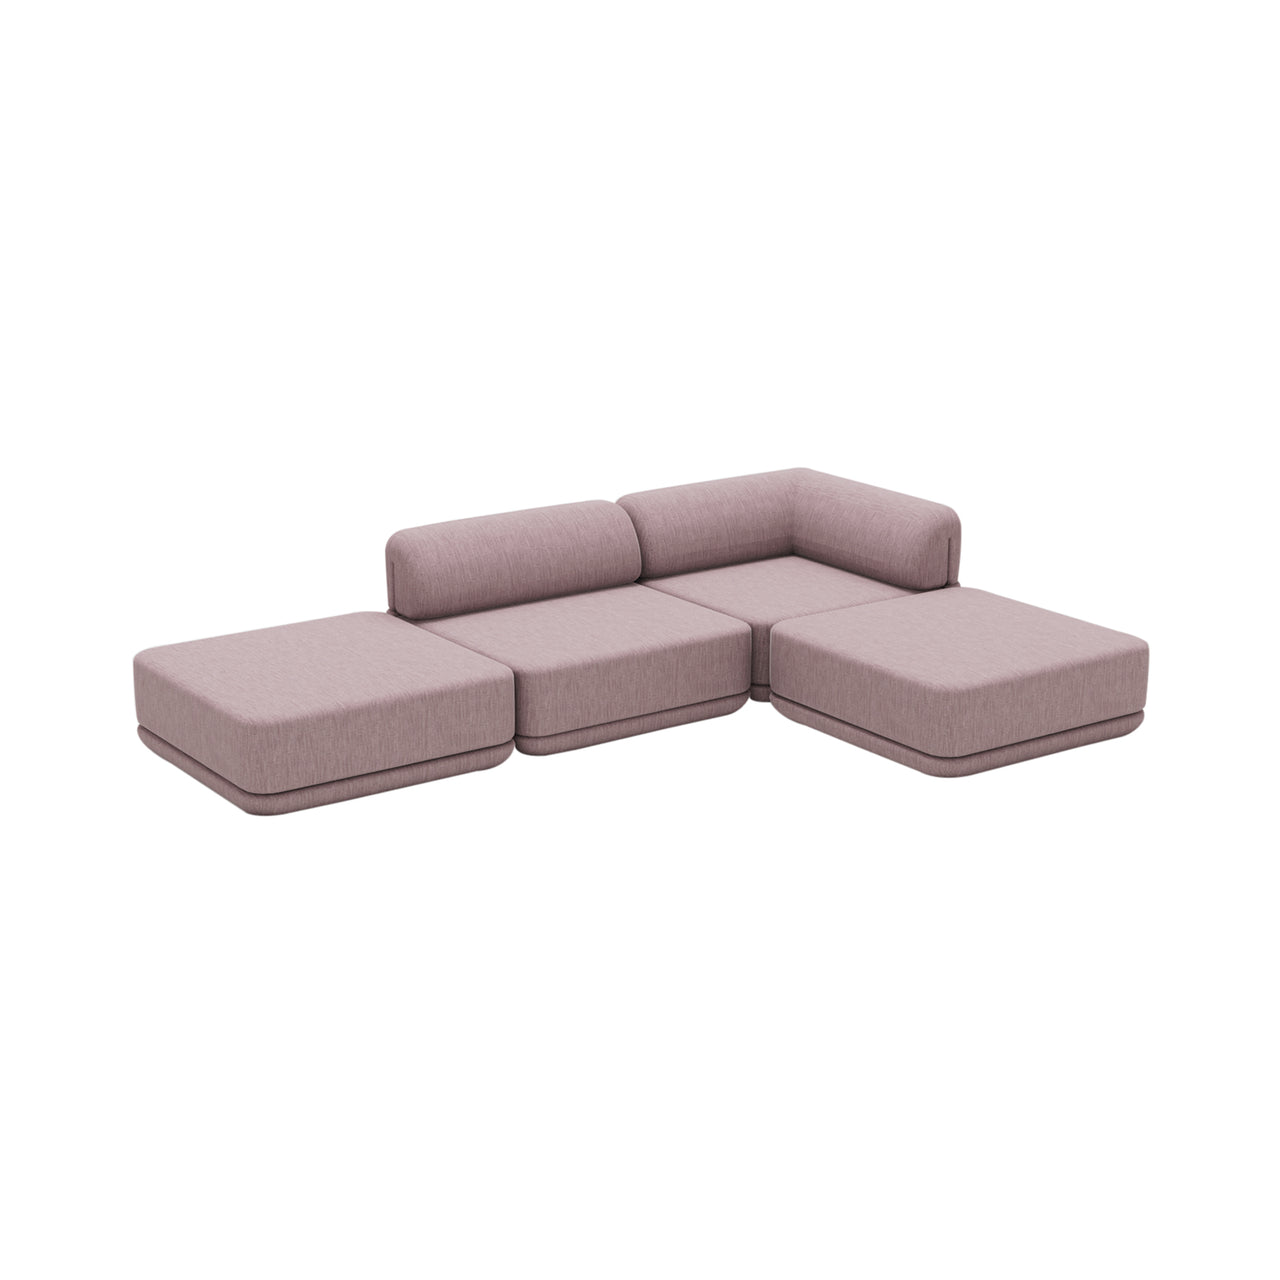 Cube Modular Sofa: Configuration 5 + Chenille Rose